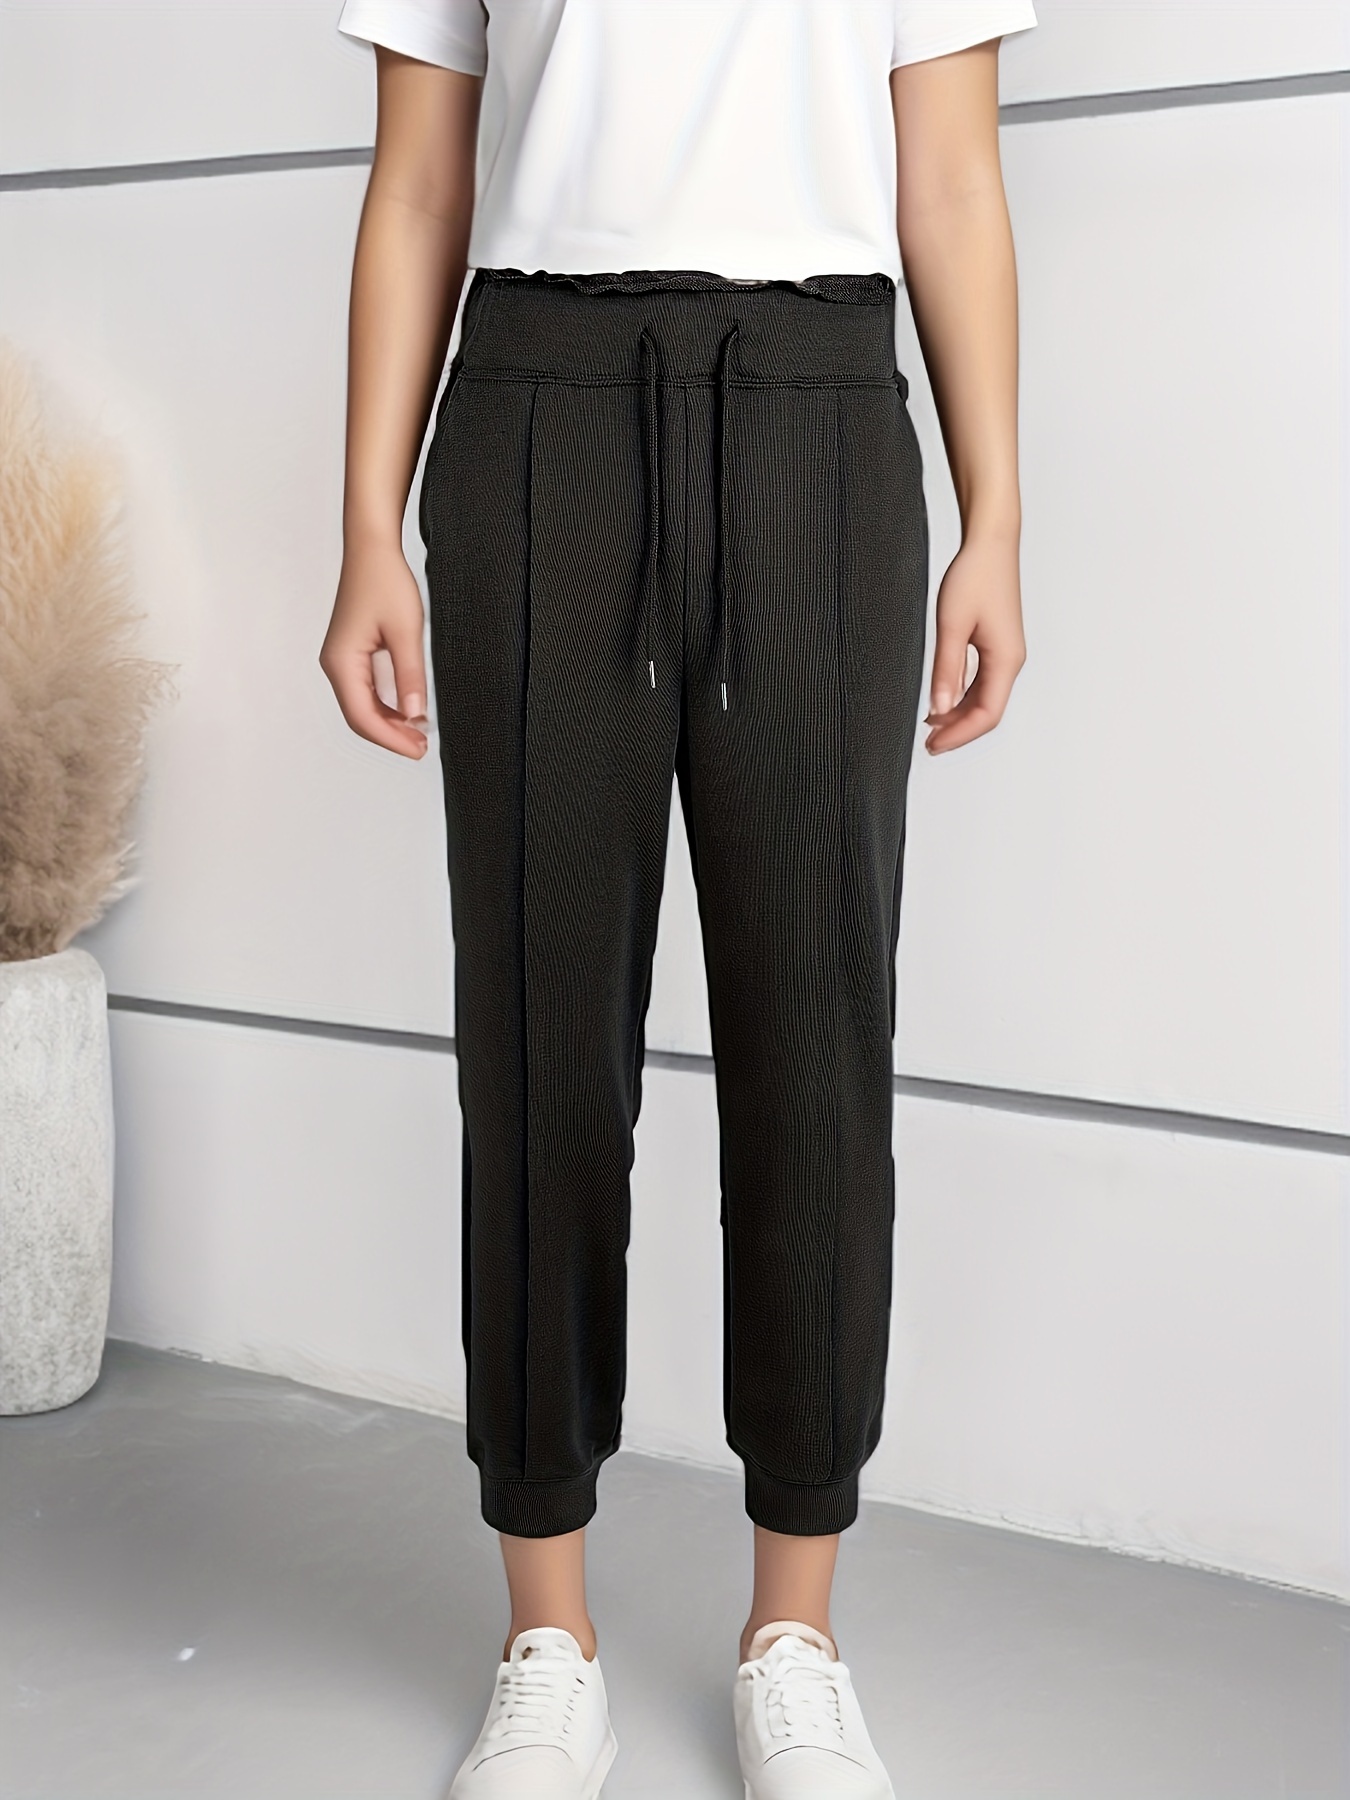 Women's Pants Fashion Sport Solid Color Drawstring Pocket Casual  Sweatpants, S-2XL